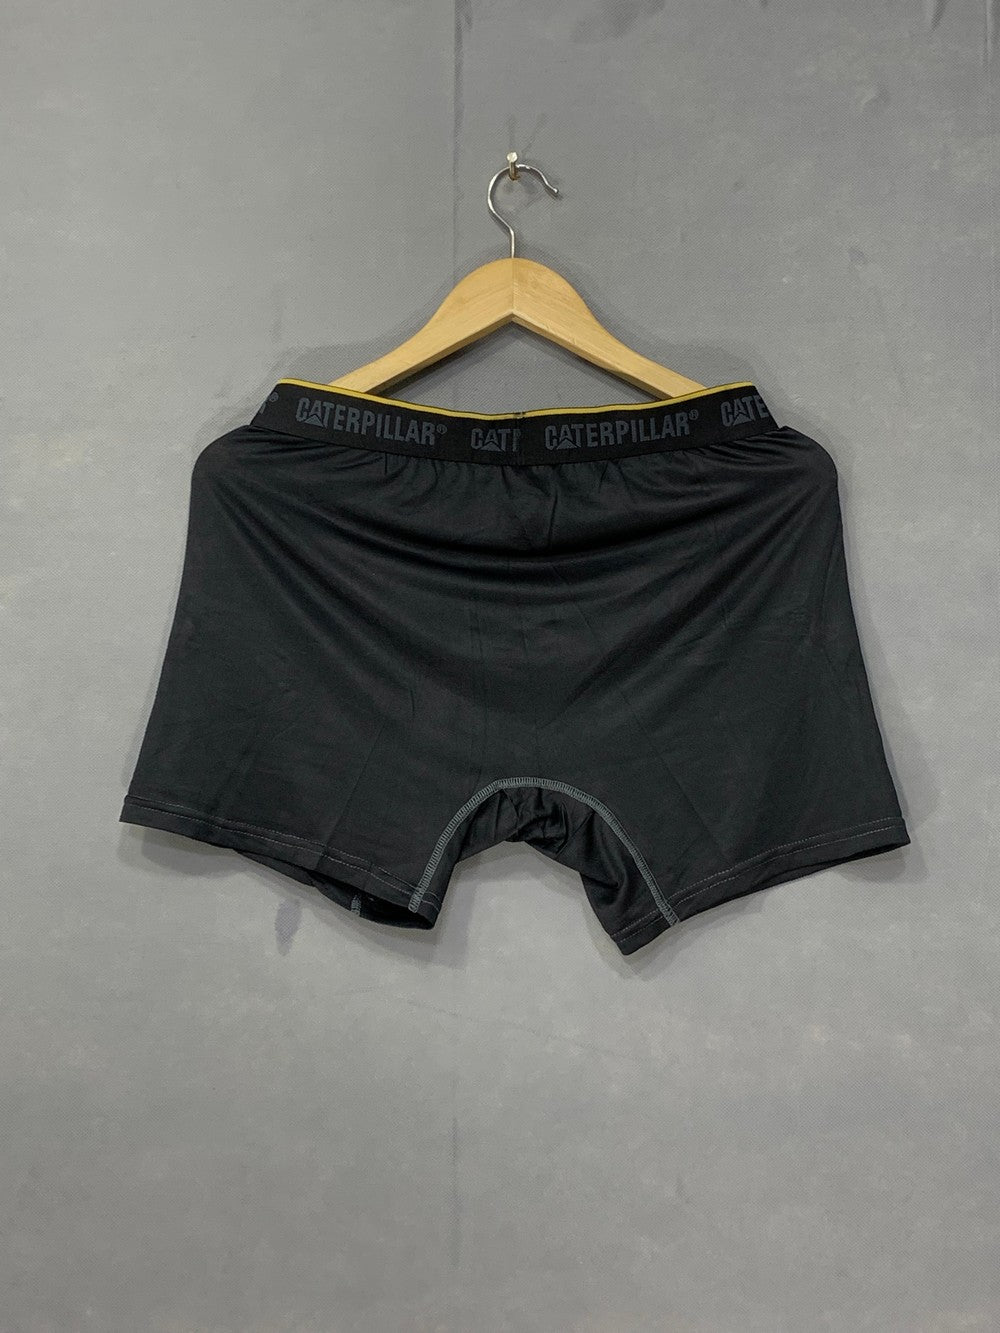 Caterpillar Original Branded Boxer Underwear For Men